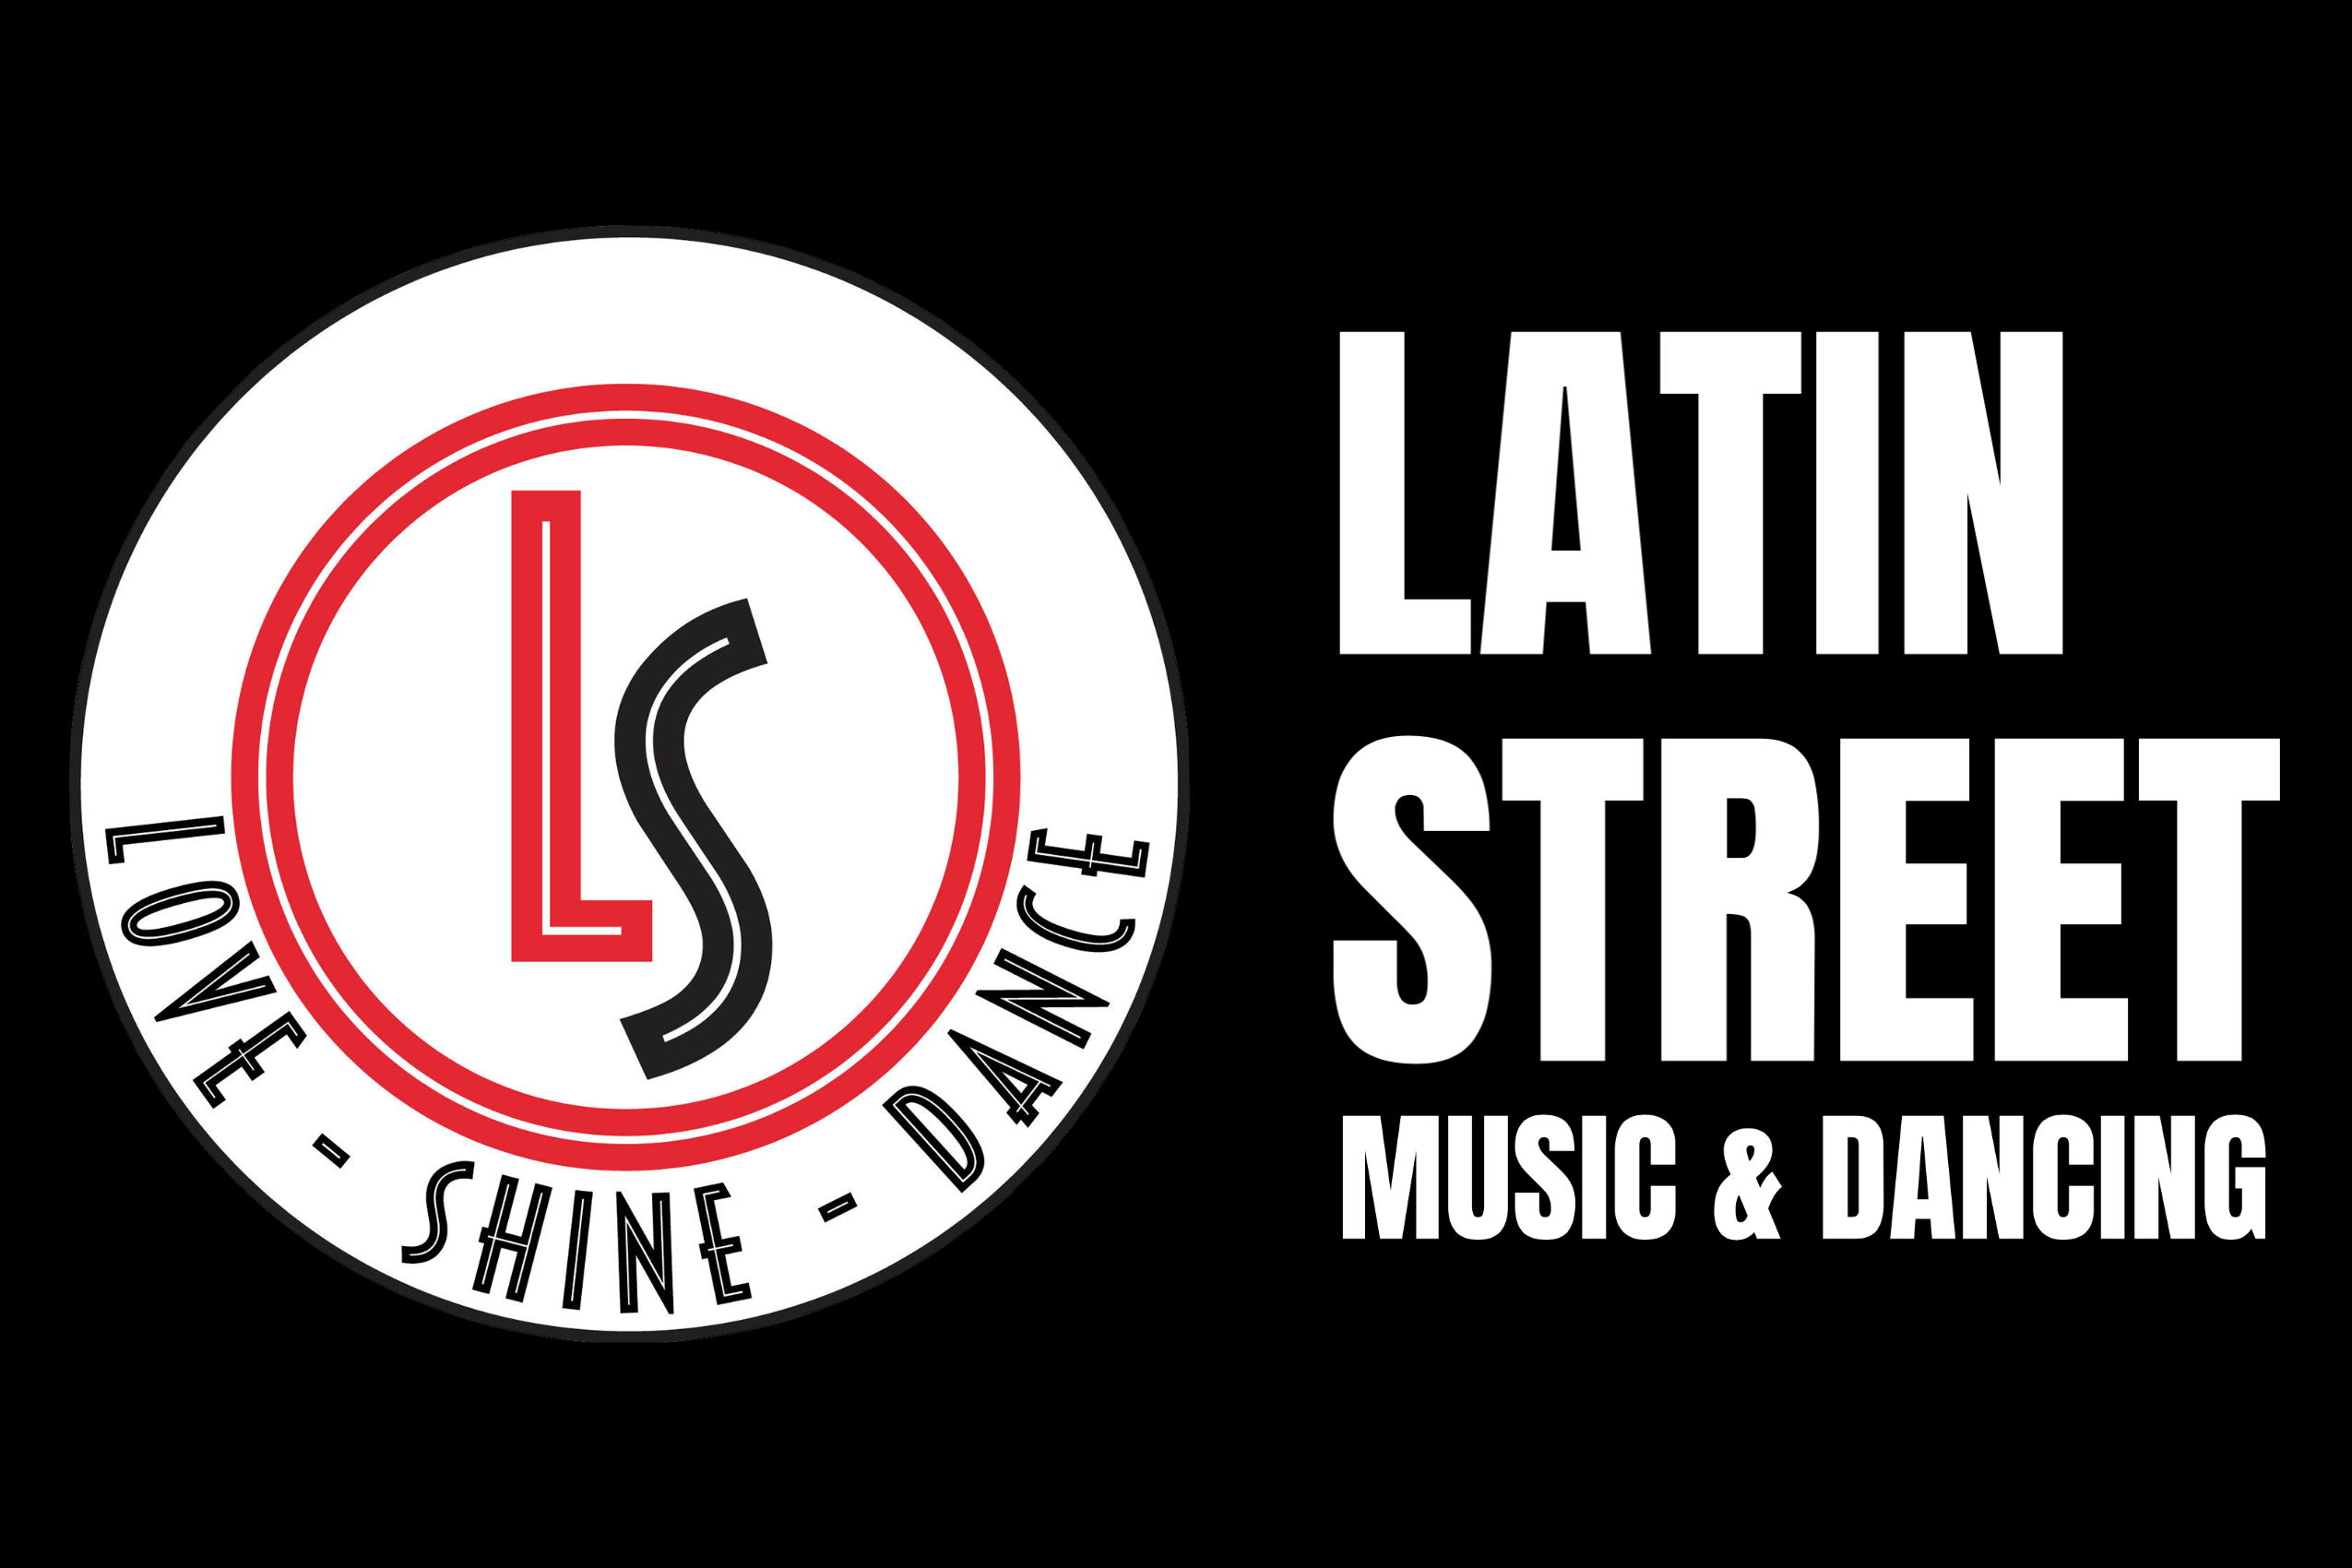 meal » Latin Street Music & Dancing